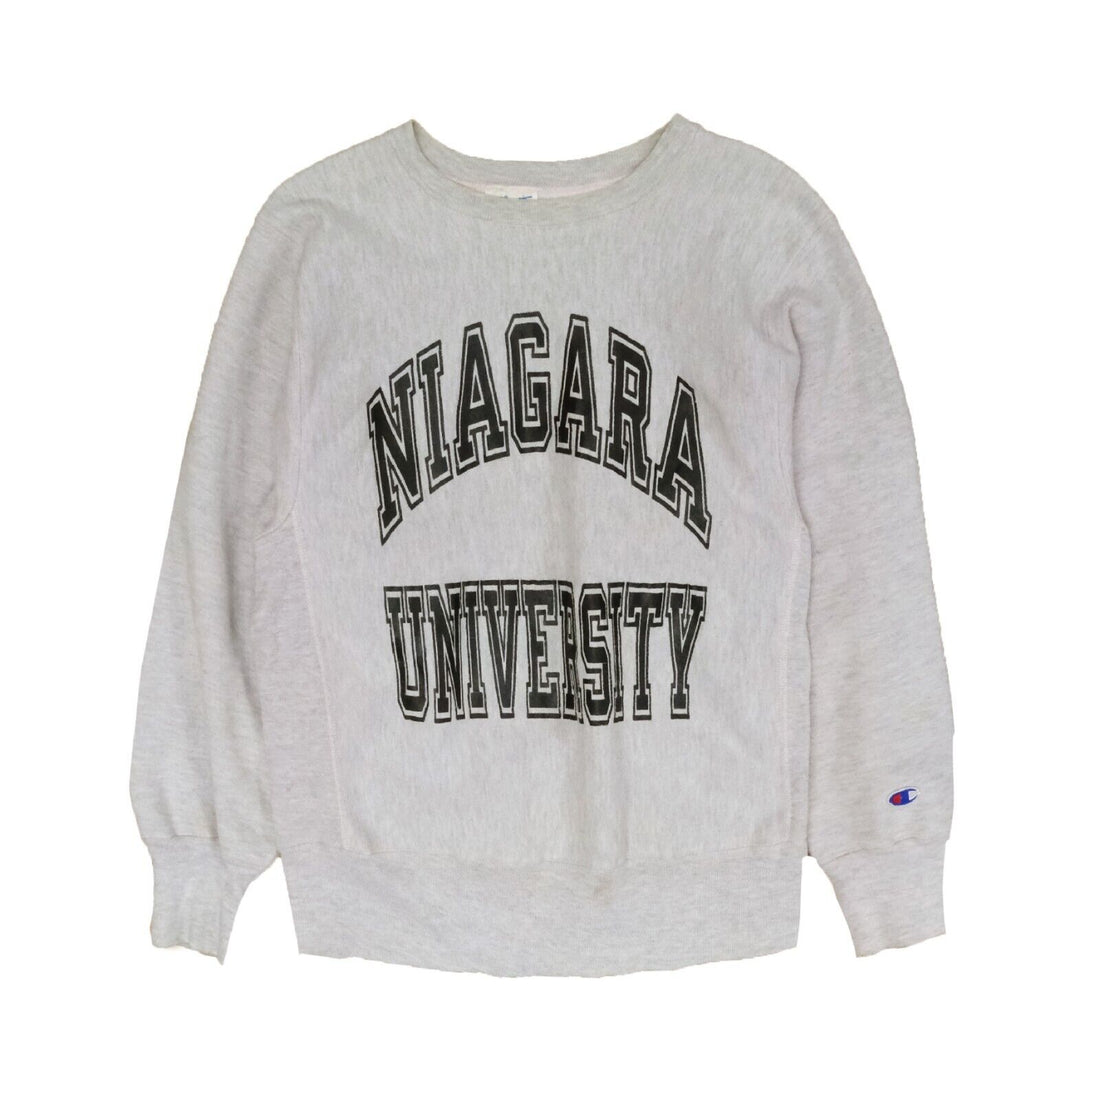 Vintage Niagara University Champion Reverse Weave Sweatshirt Size Medium 80s